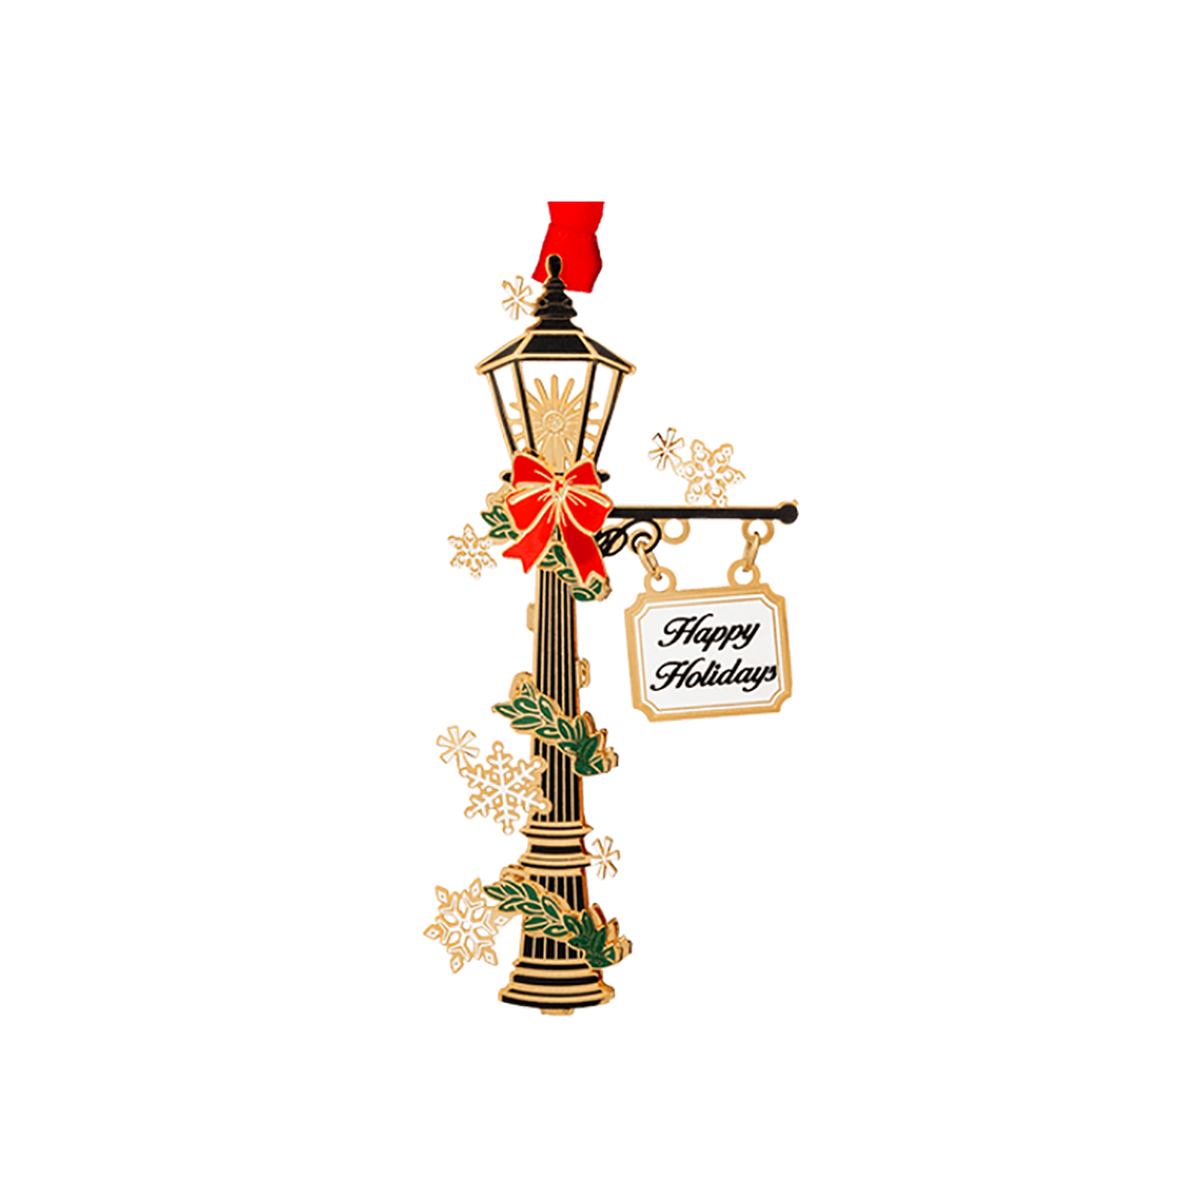 Beacon Design Holiday Lamp Post Ornament